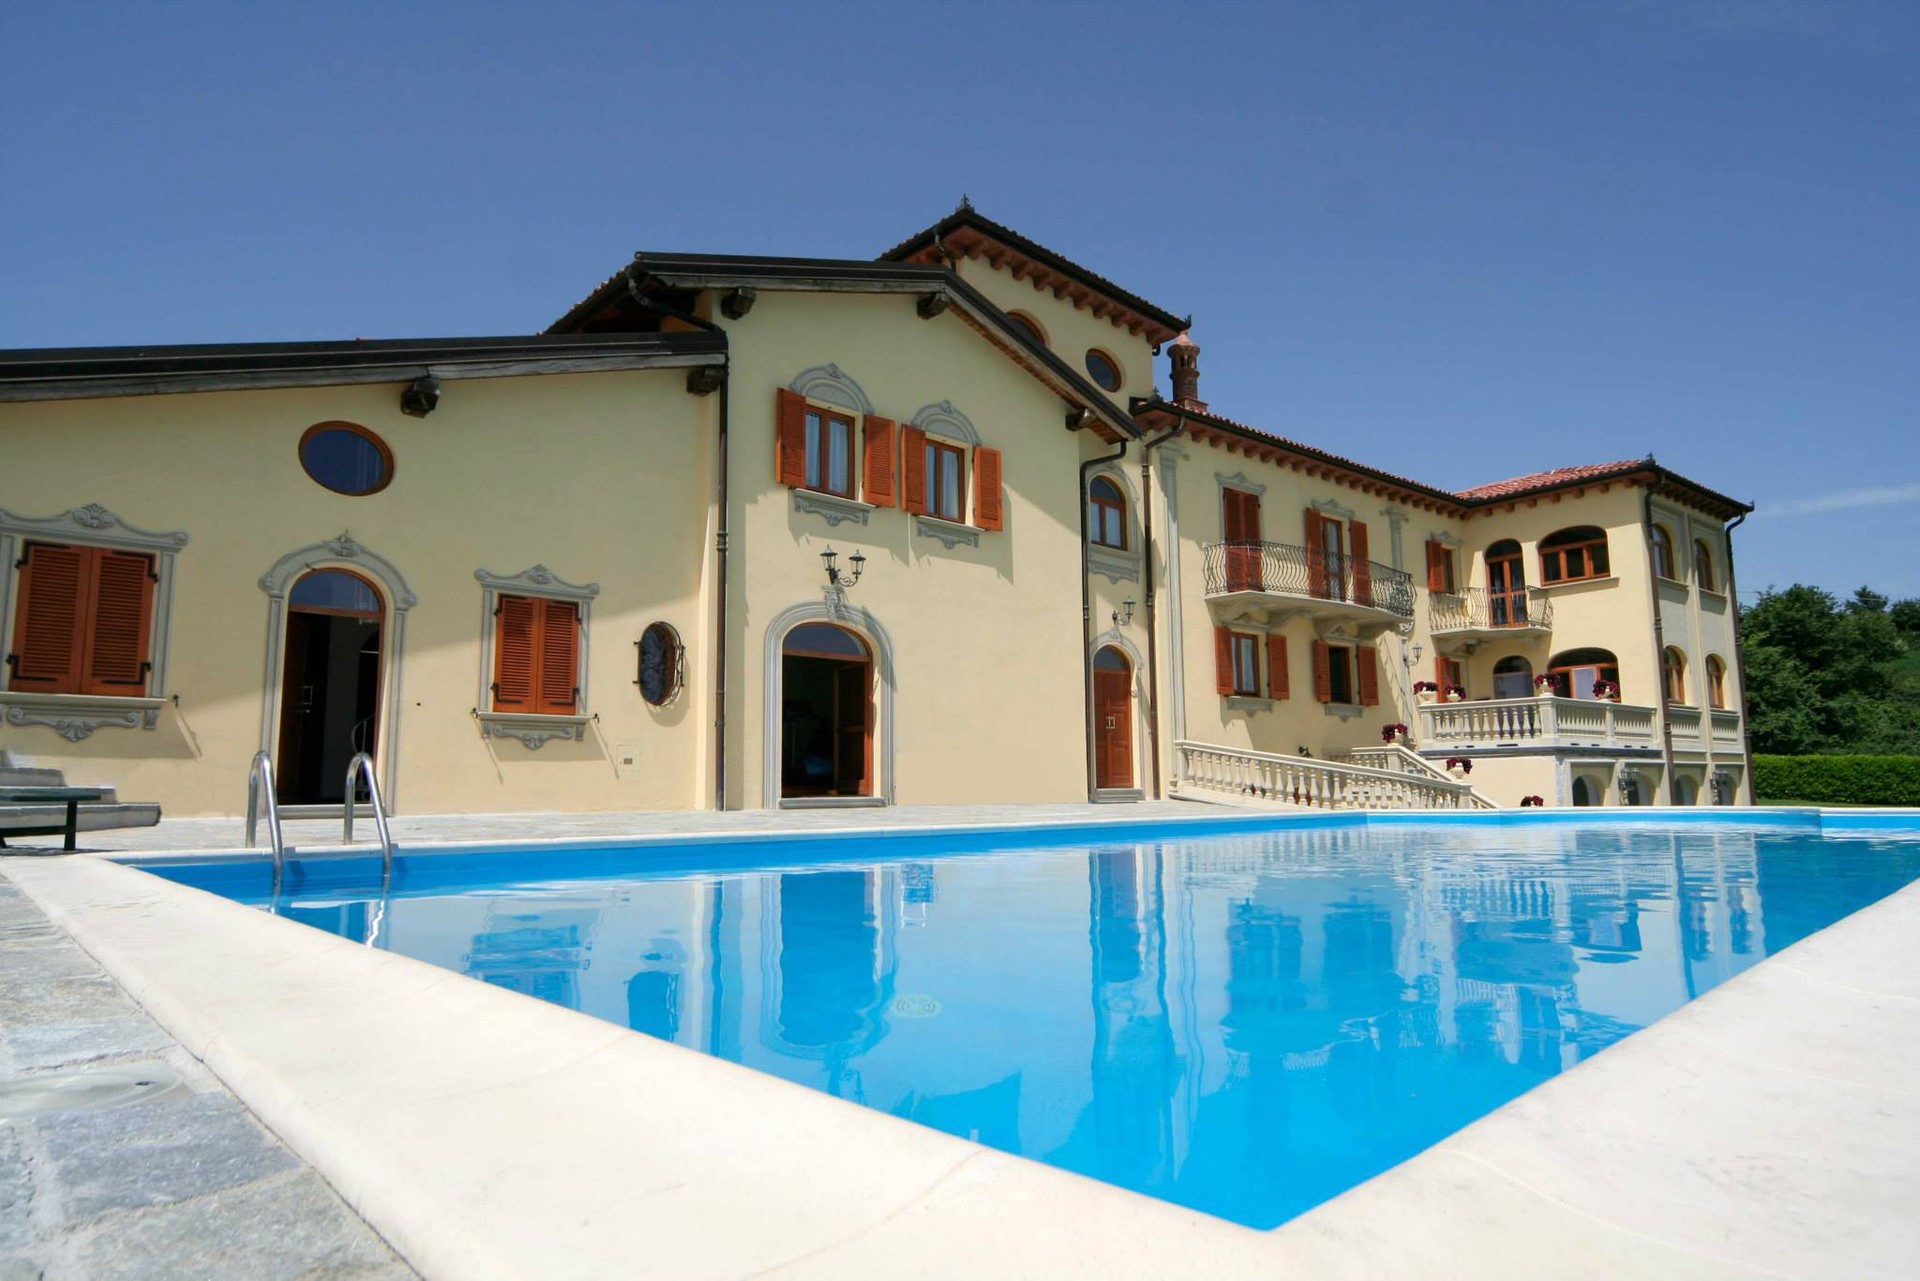 Vendita villa in zona tranquilla Cuneo Piemonte